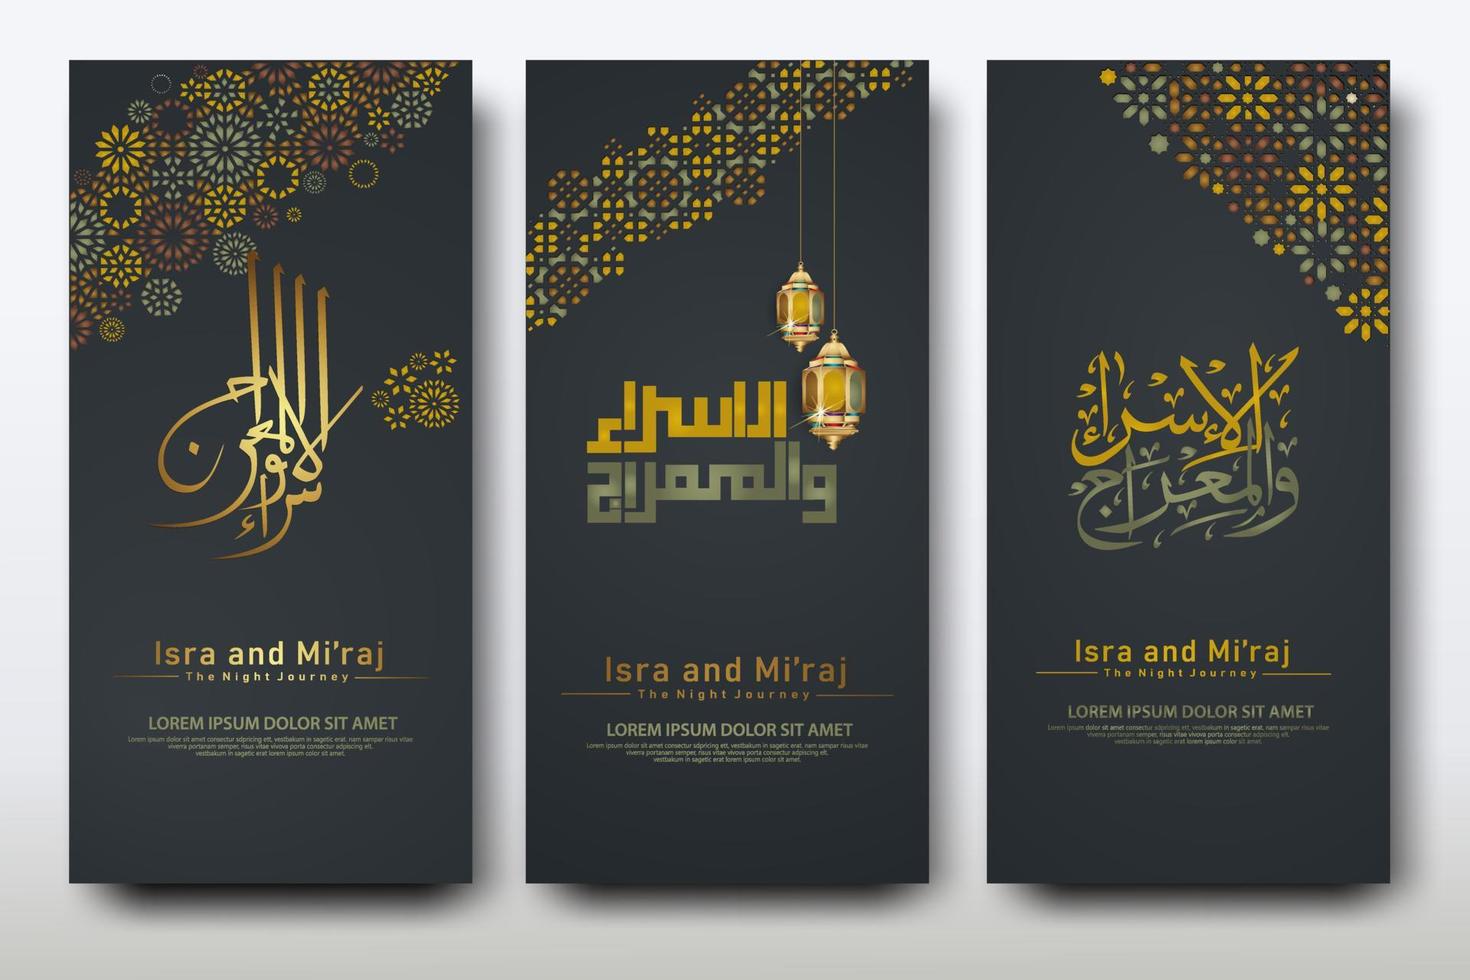 Al-Isra wal Mi'raj Prophet Muhammad calligraphy set banner template vector